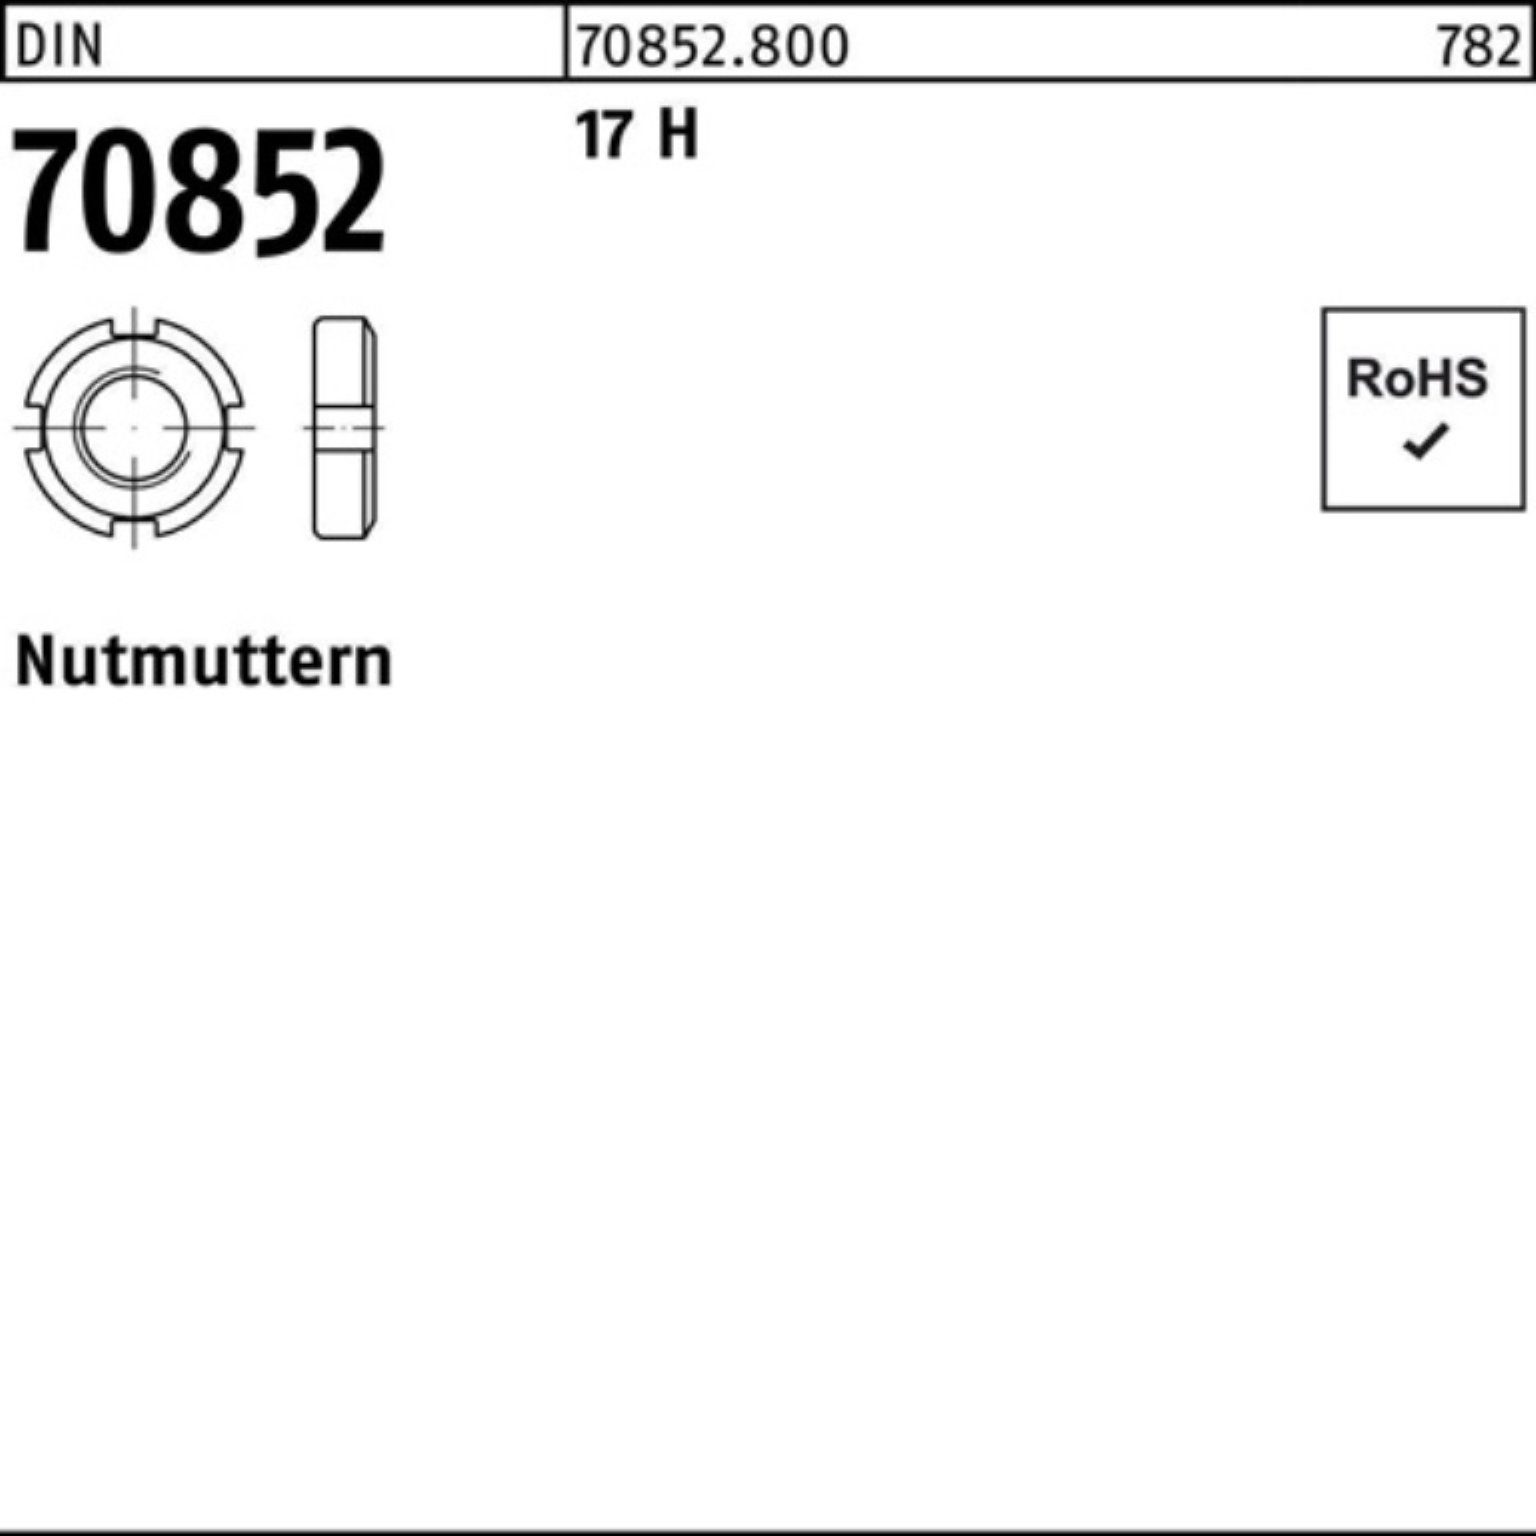 Reyher Nutmutter 100er Pack Nutmutter DIN 70852 M22x 1,5 17 H 10 Stück DIN 70852 17 H